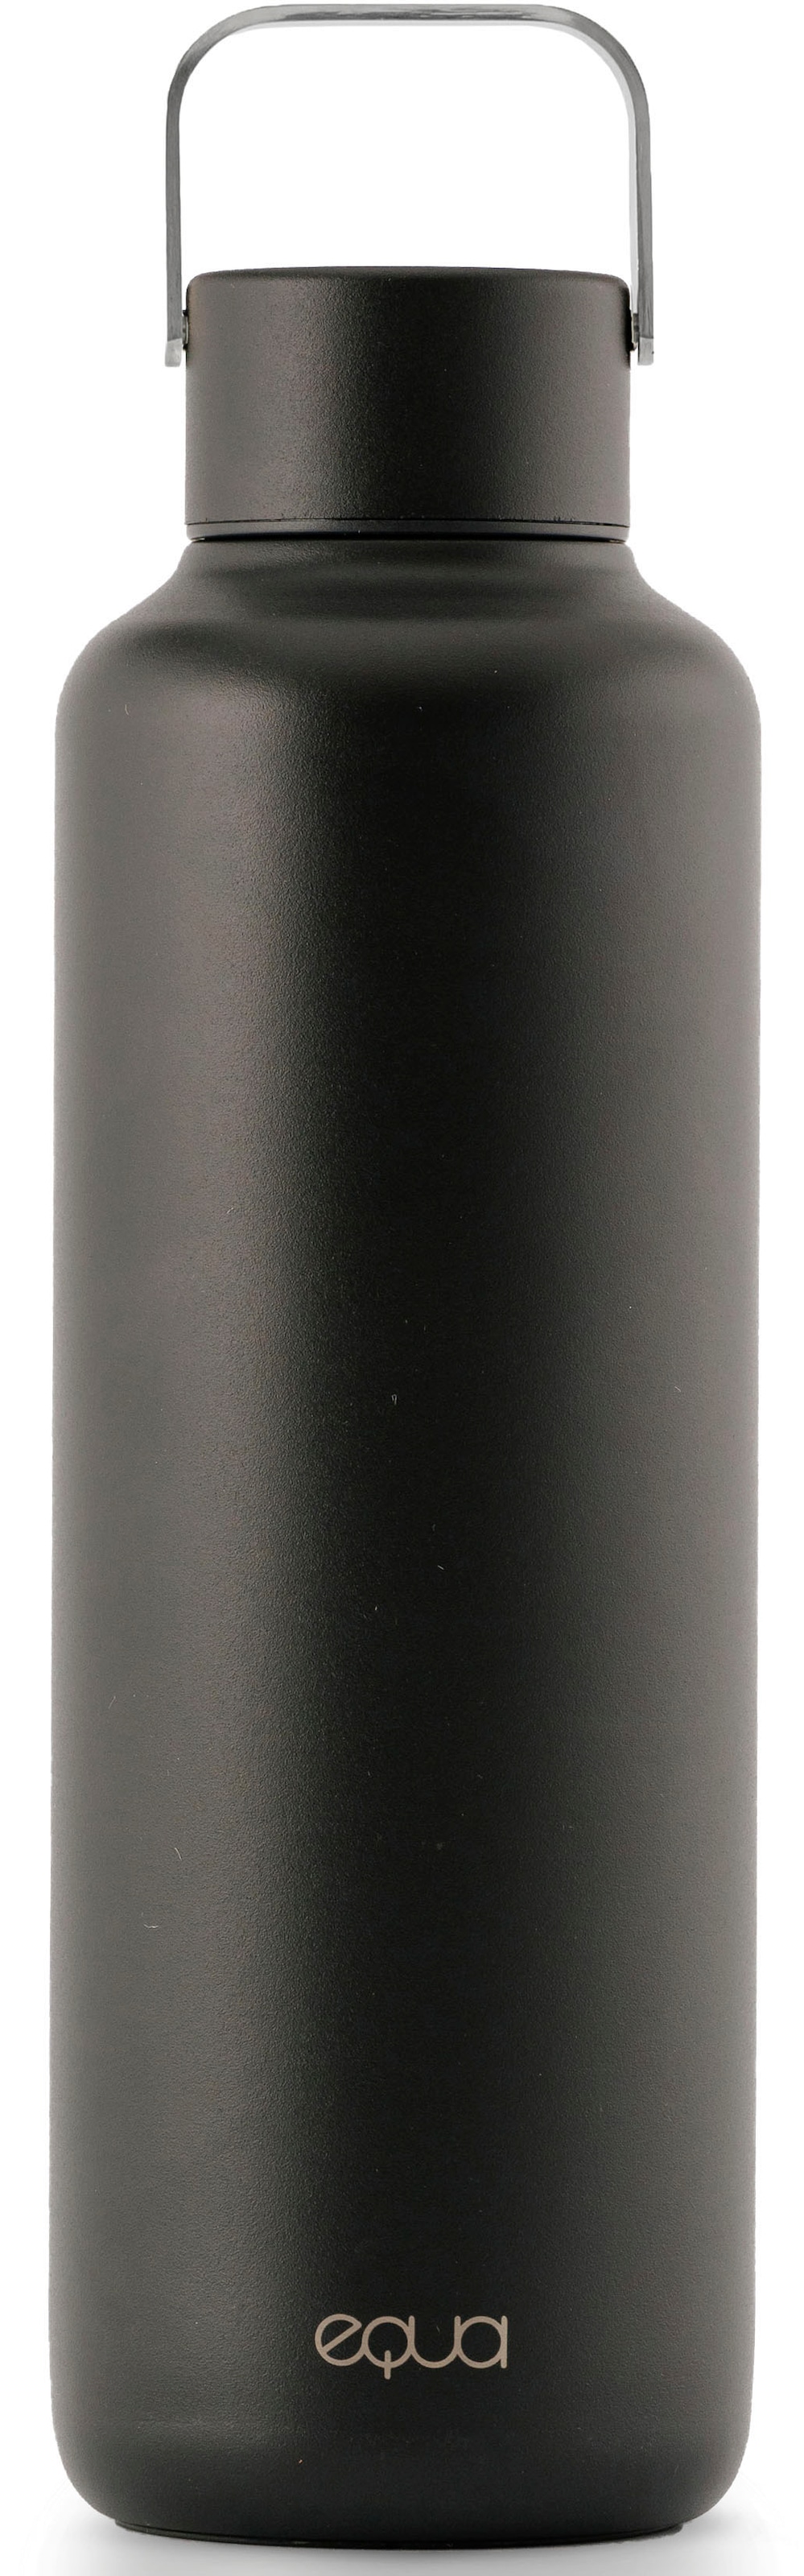 equa Isolierflasche »Timeless Dark 600 ml«, Edelstahl, doppelwandig